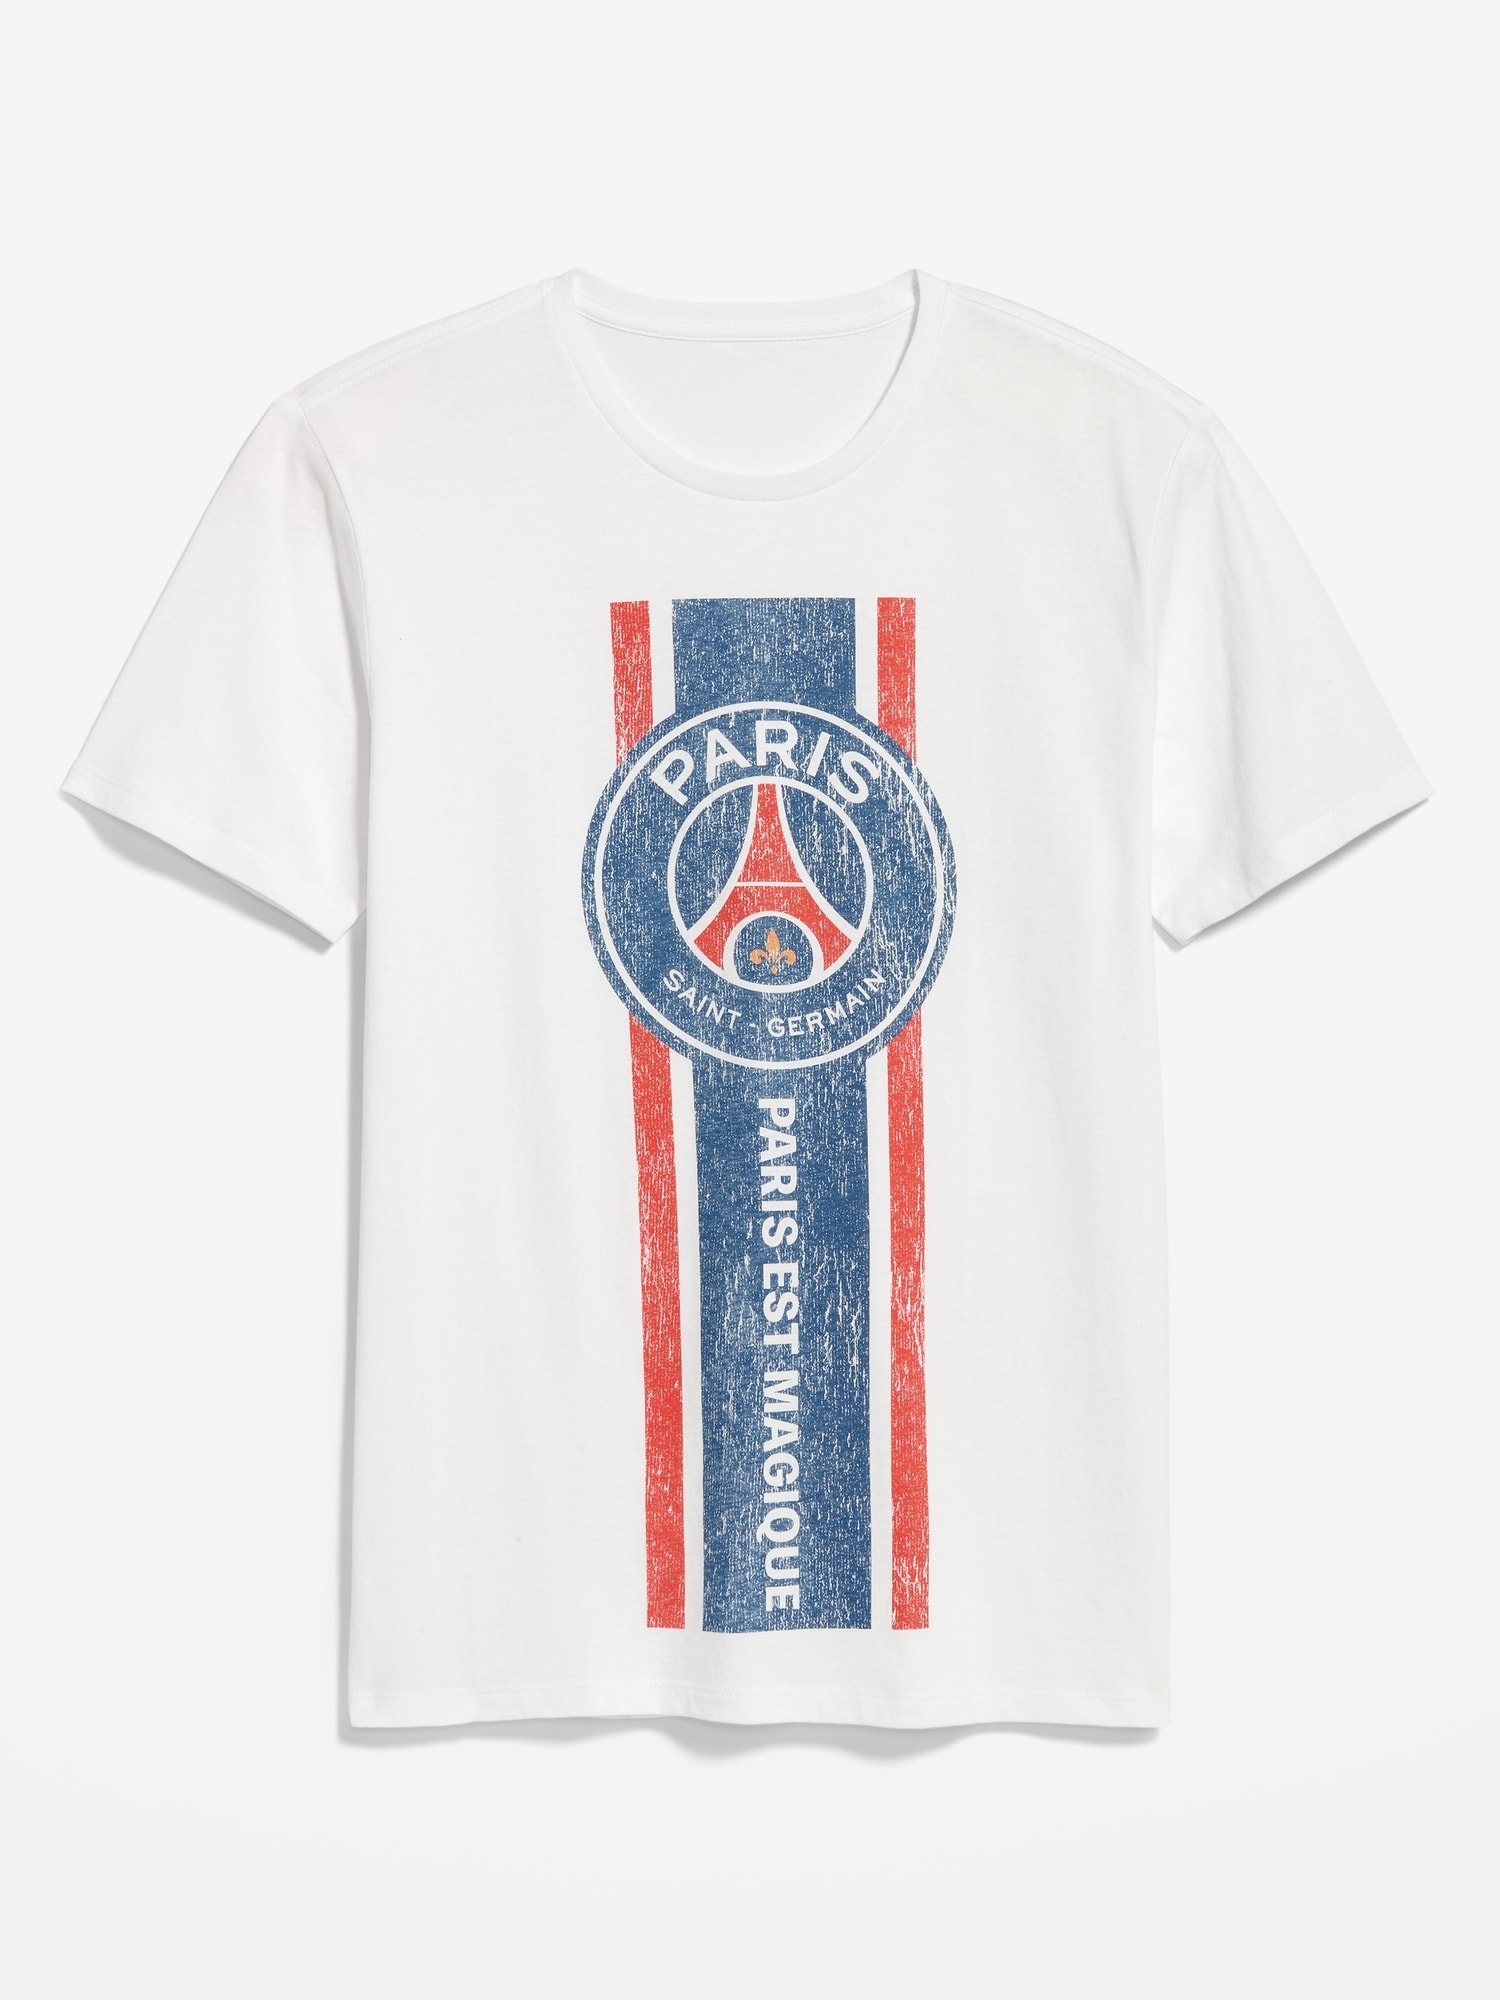 Paris Saint-Germain Gender-Neutral T-Shirt for Adults